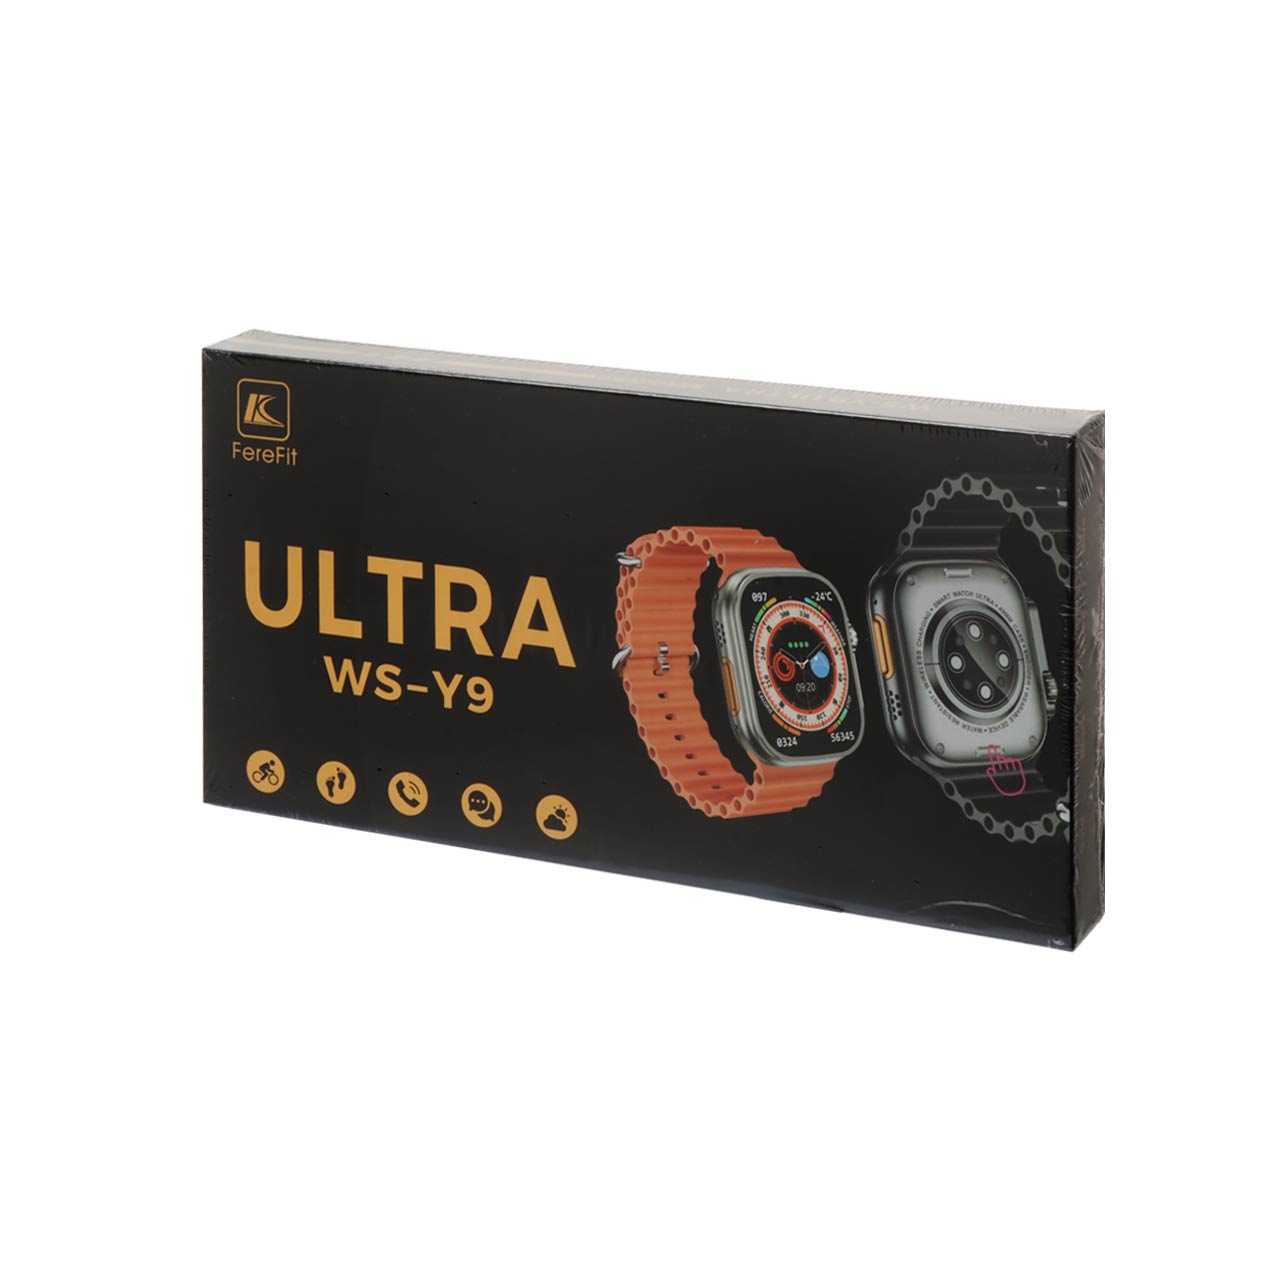 ساعت هوشمند FereFit مدل WS-Y9 ULTRA - نقره ای